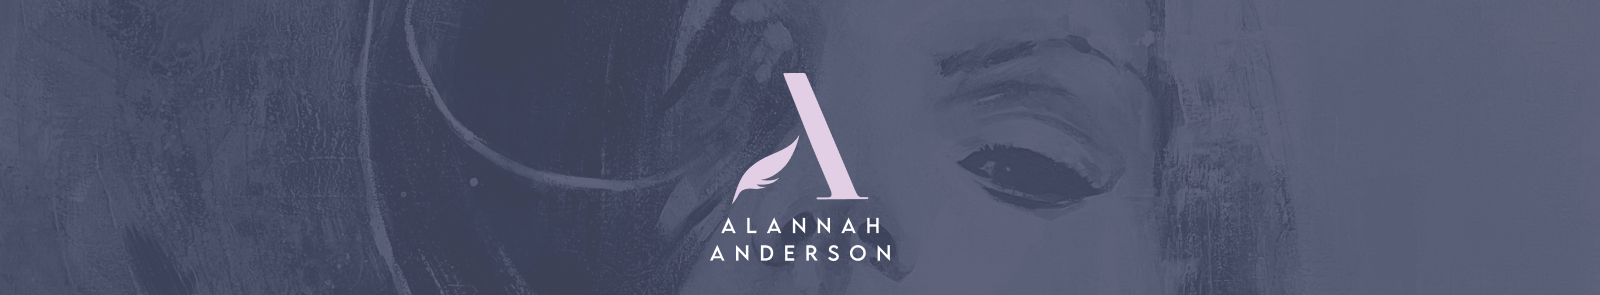 Alannah Anderson のプロファイルバナー